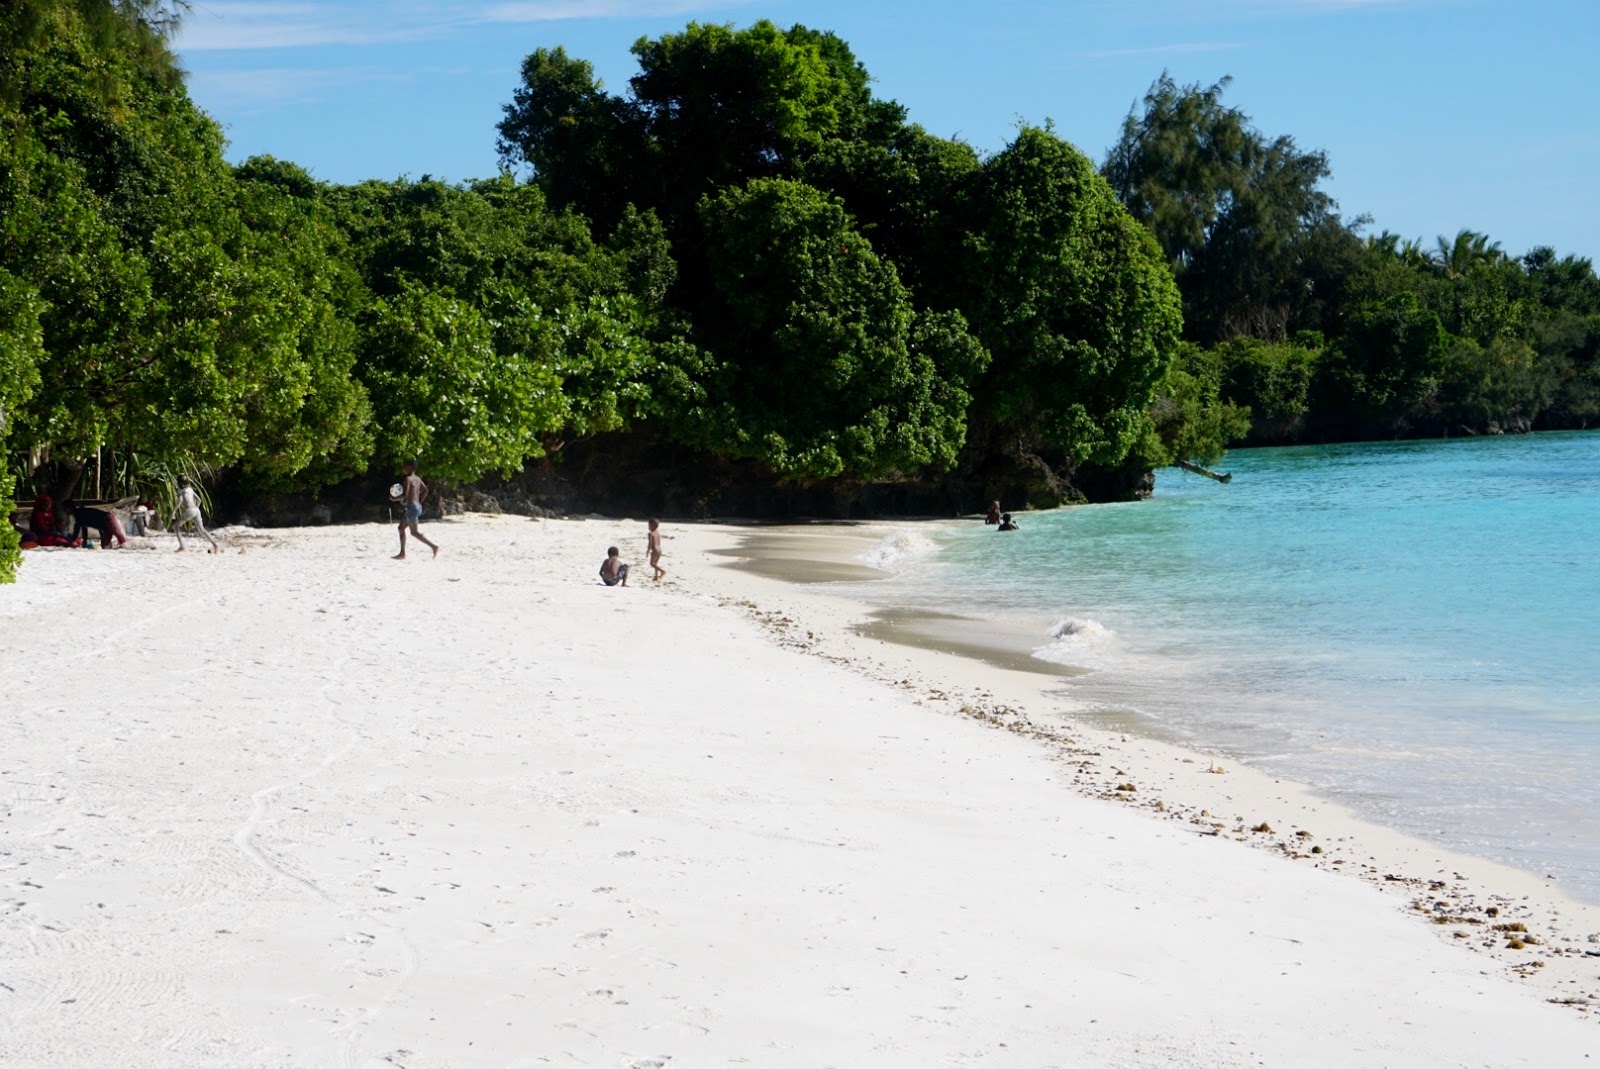 Foto di Pemba Island Beach con una superficie del sabbia pura bianca